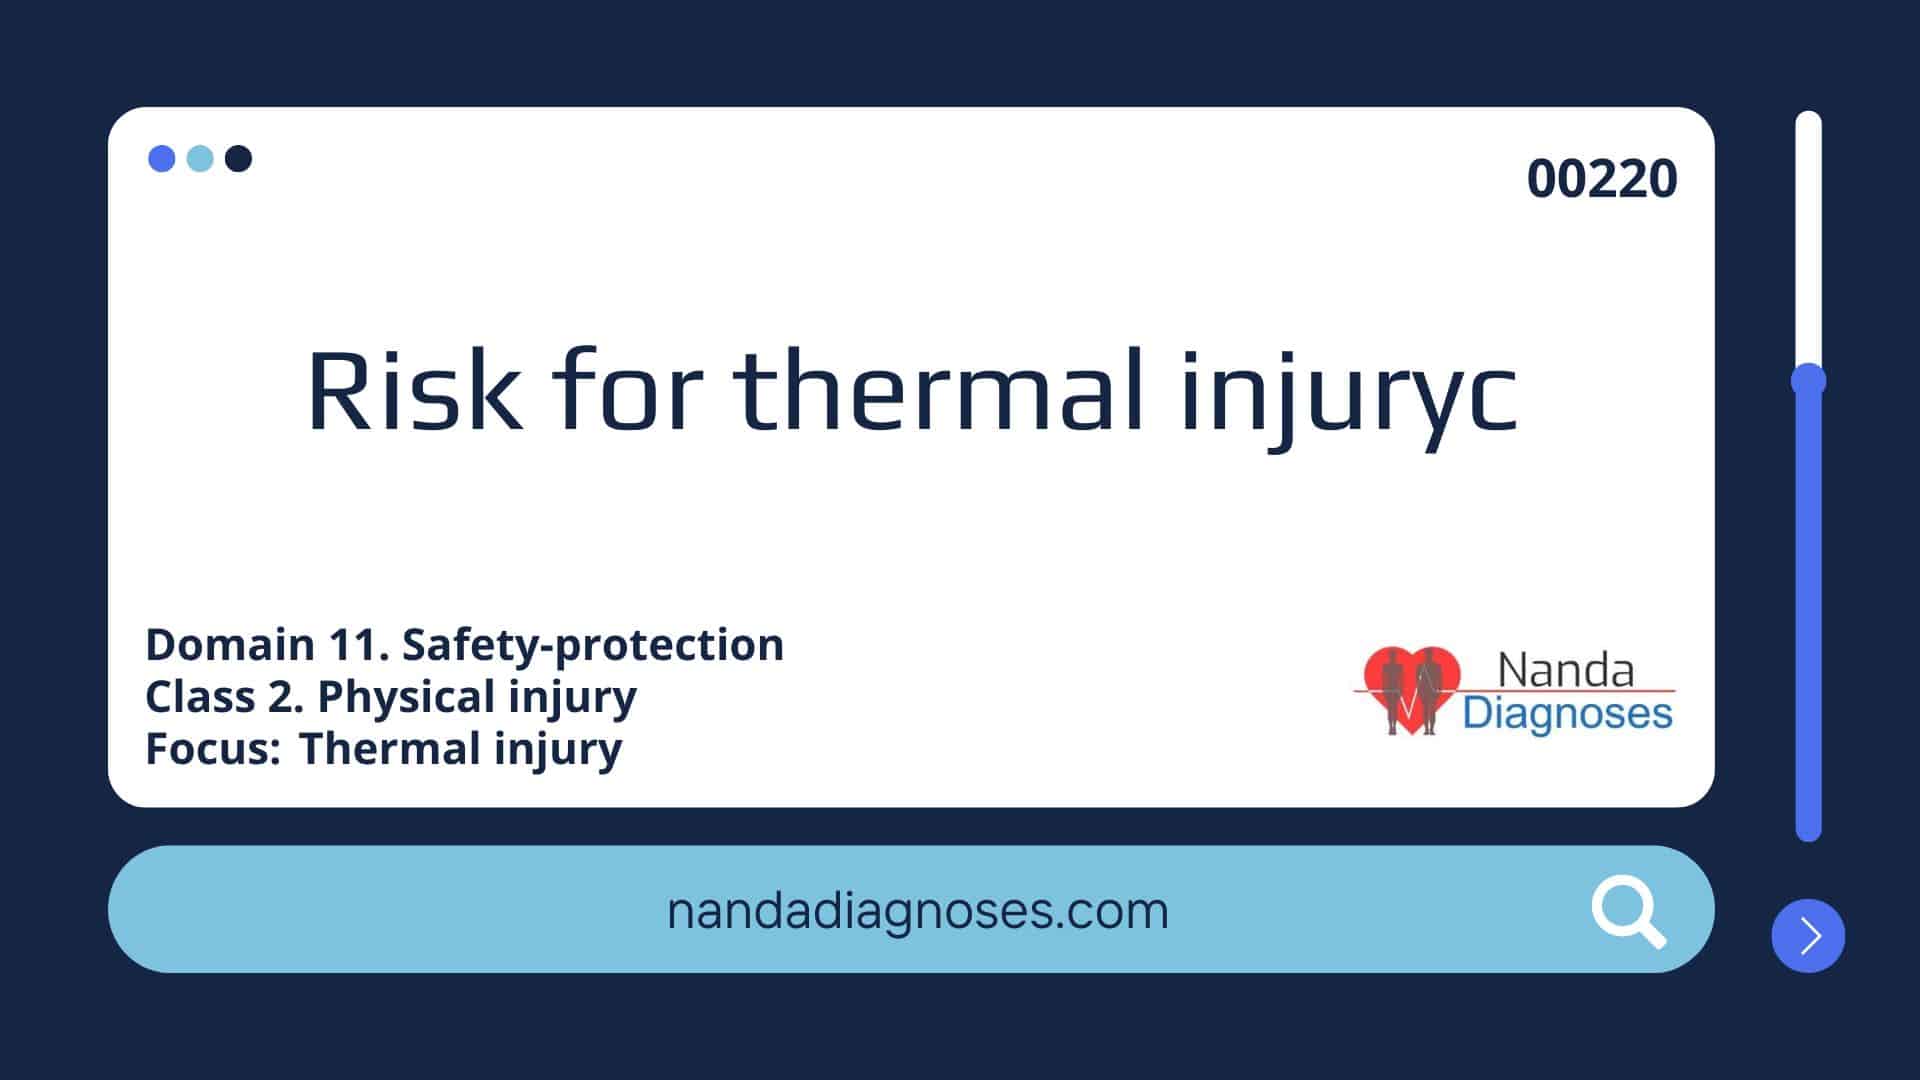 Nursing diagnosis Risk for thermal injuryc